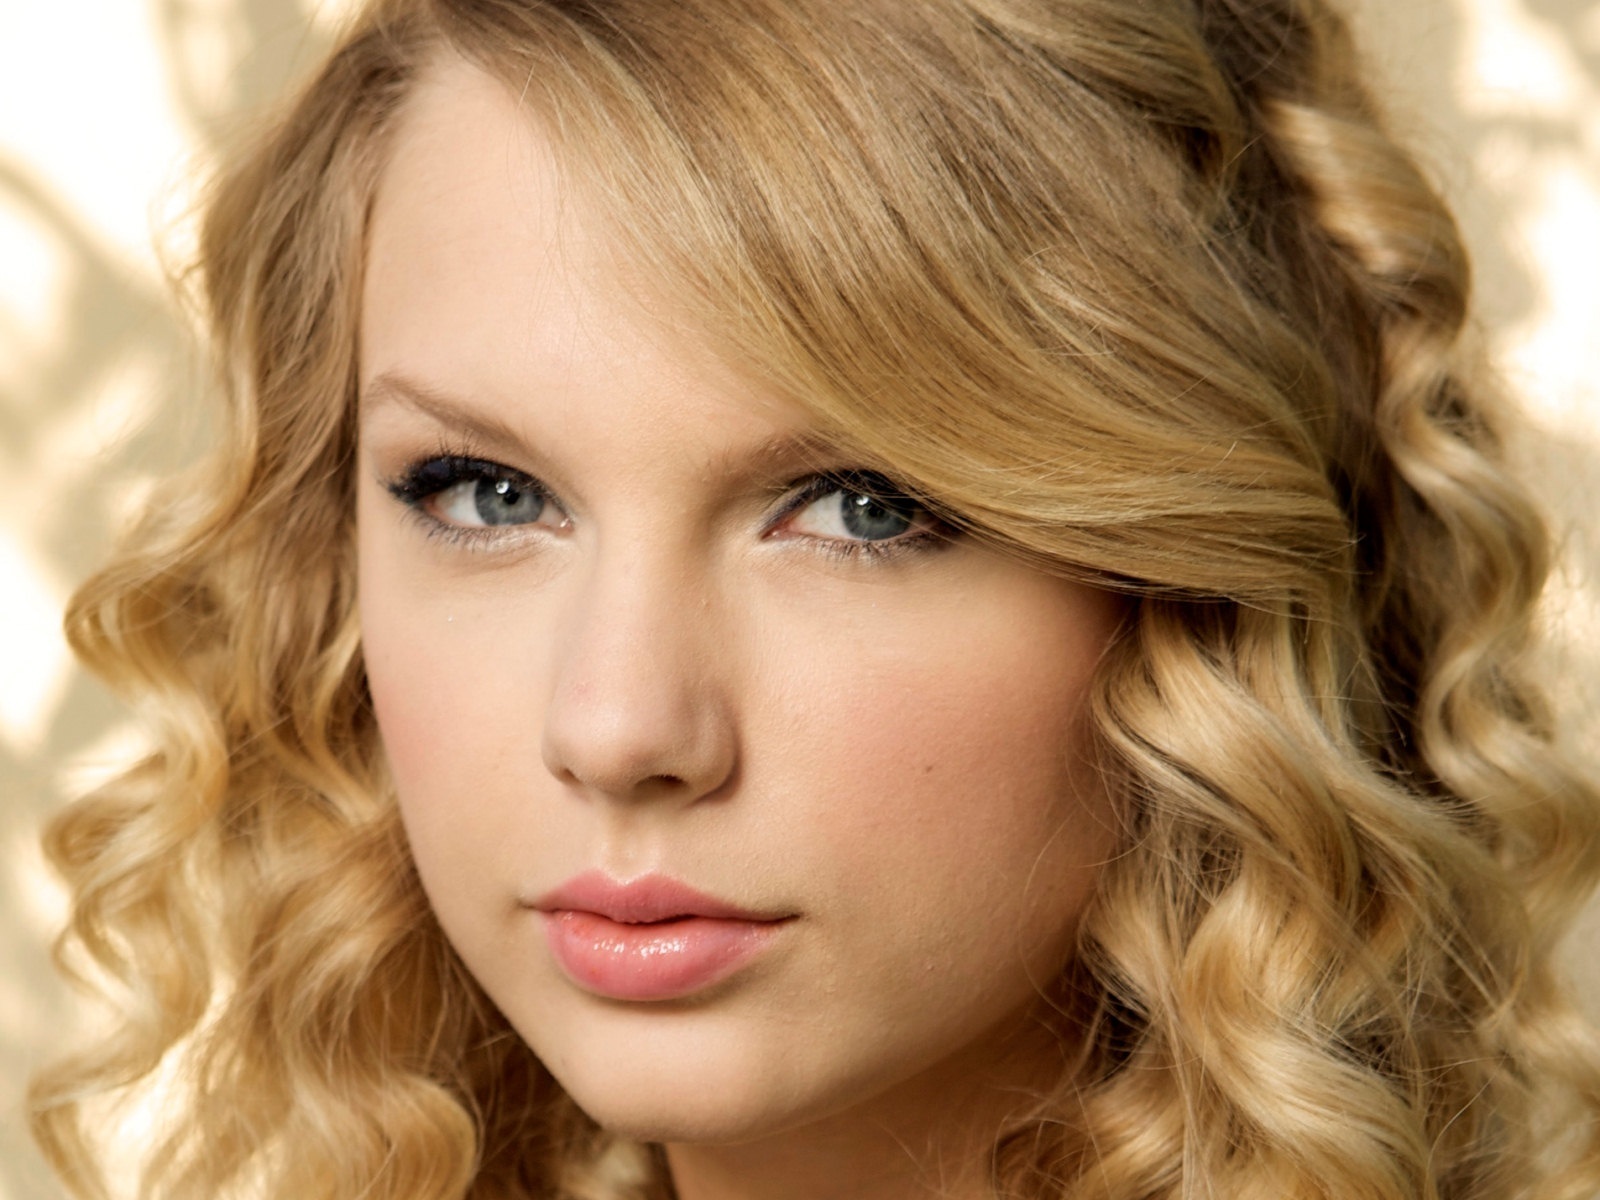 1.Taylor Swift